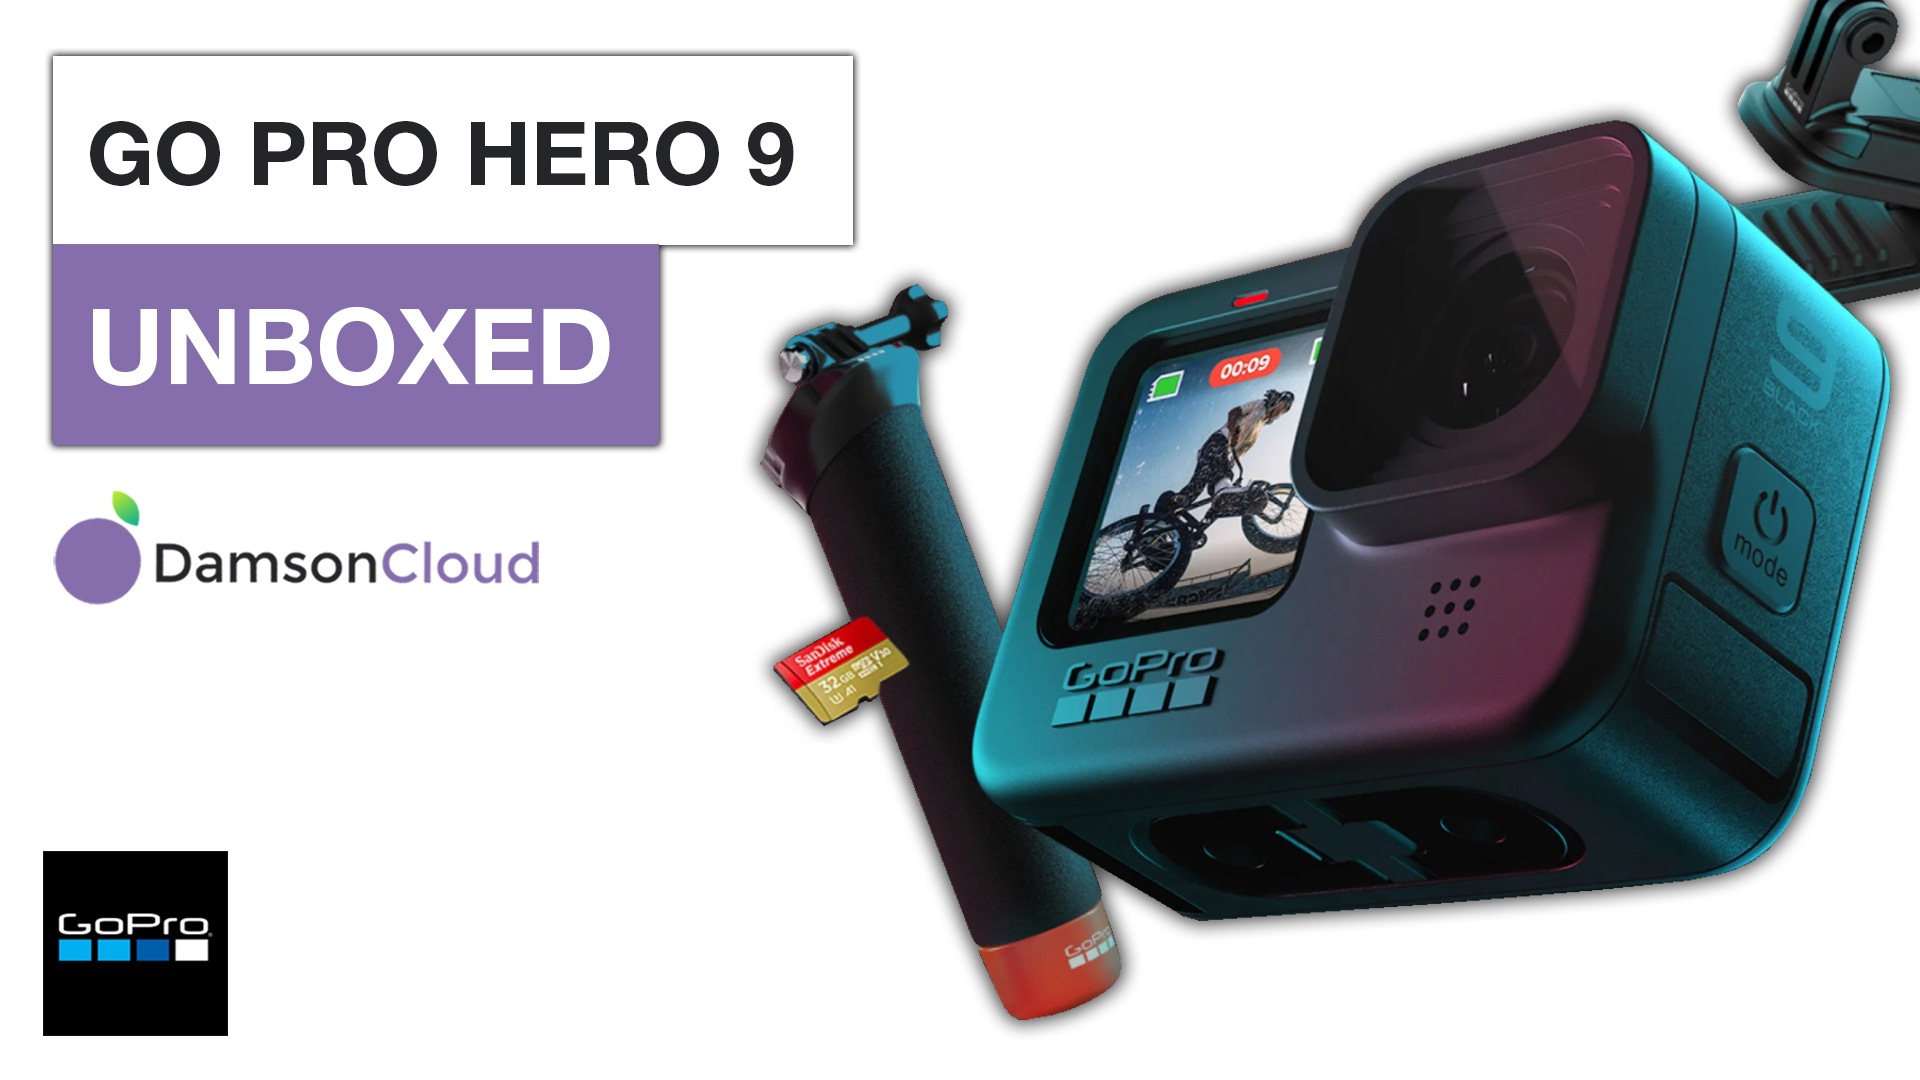 The GoPro Hero9 Unboxing